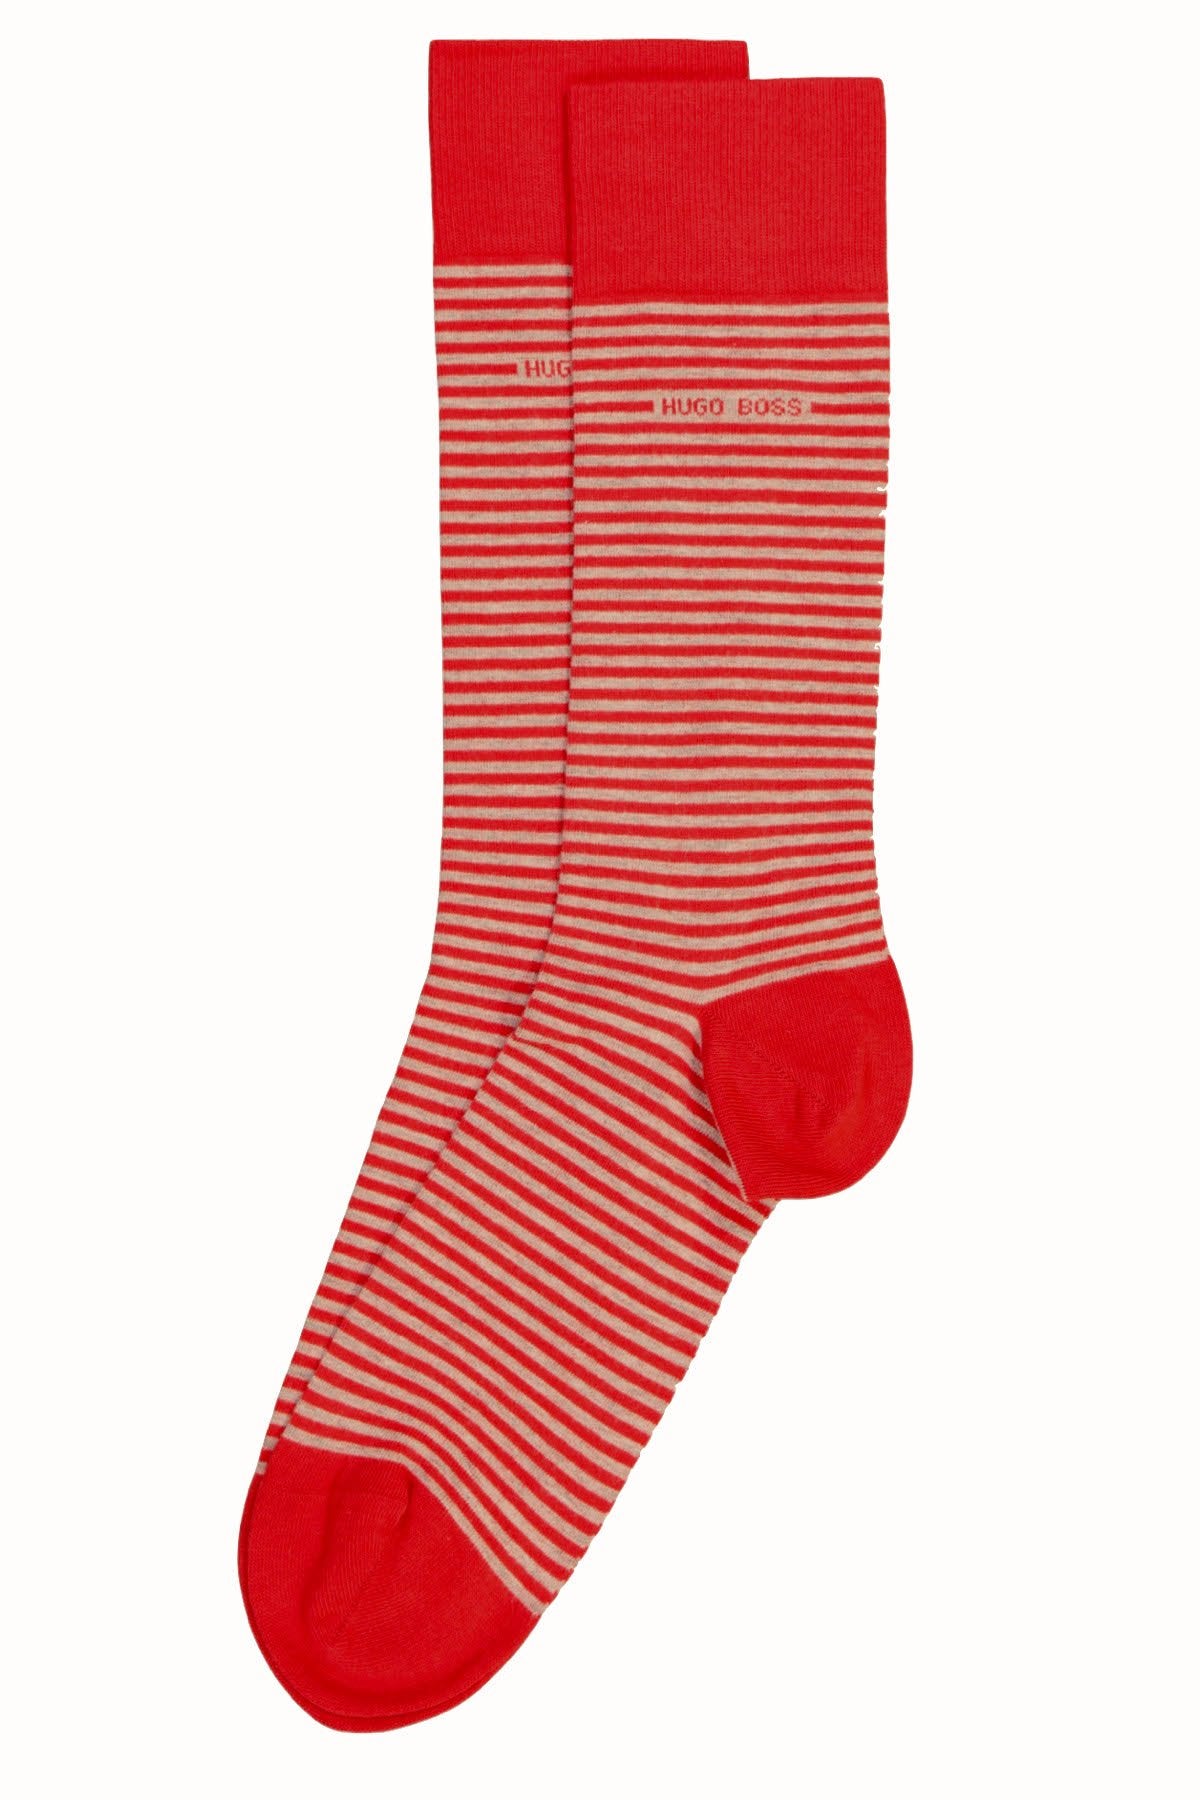 Hugo Boss Red & Grey Stripe Sock